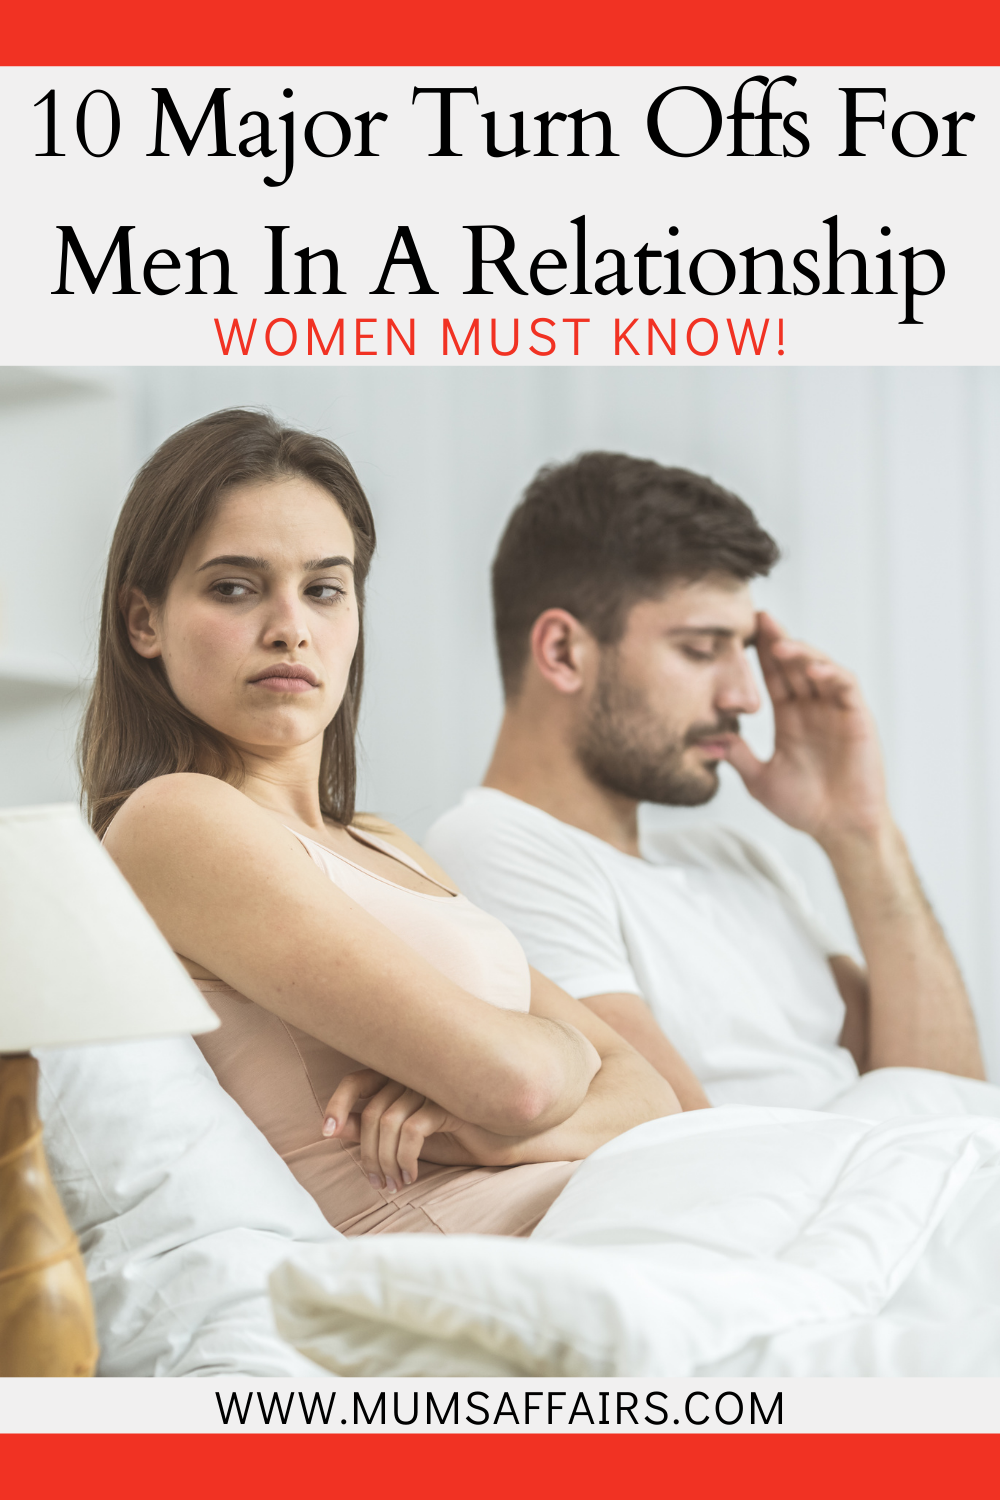 Turn Offs For Men In A Relationship